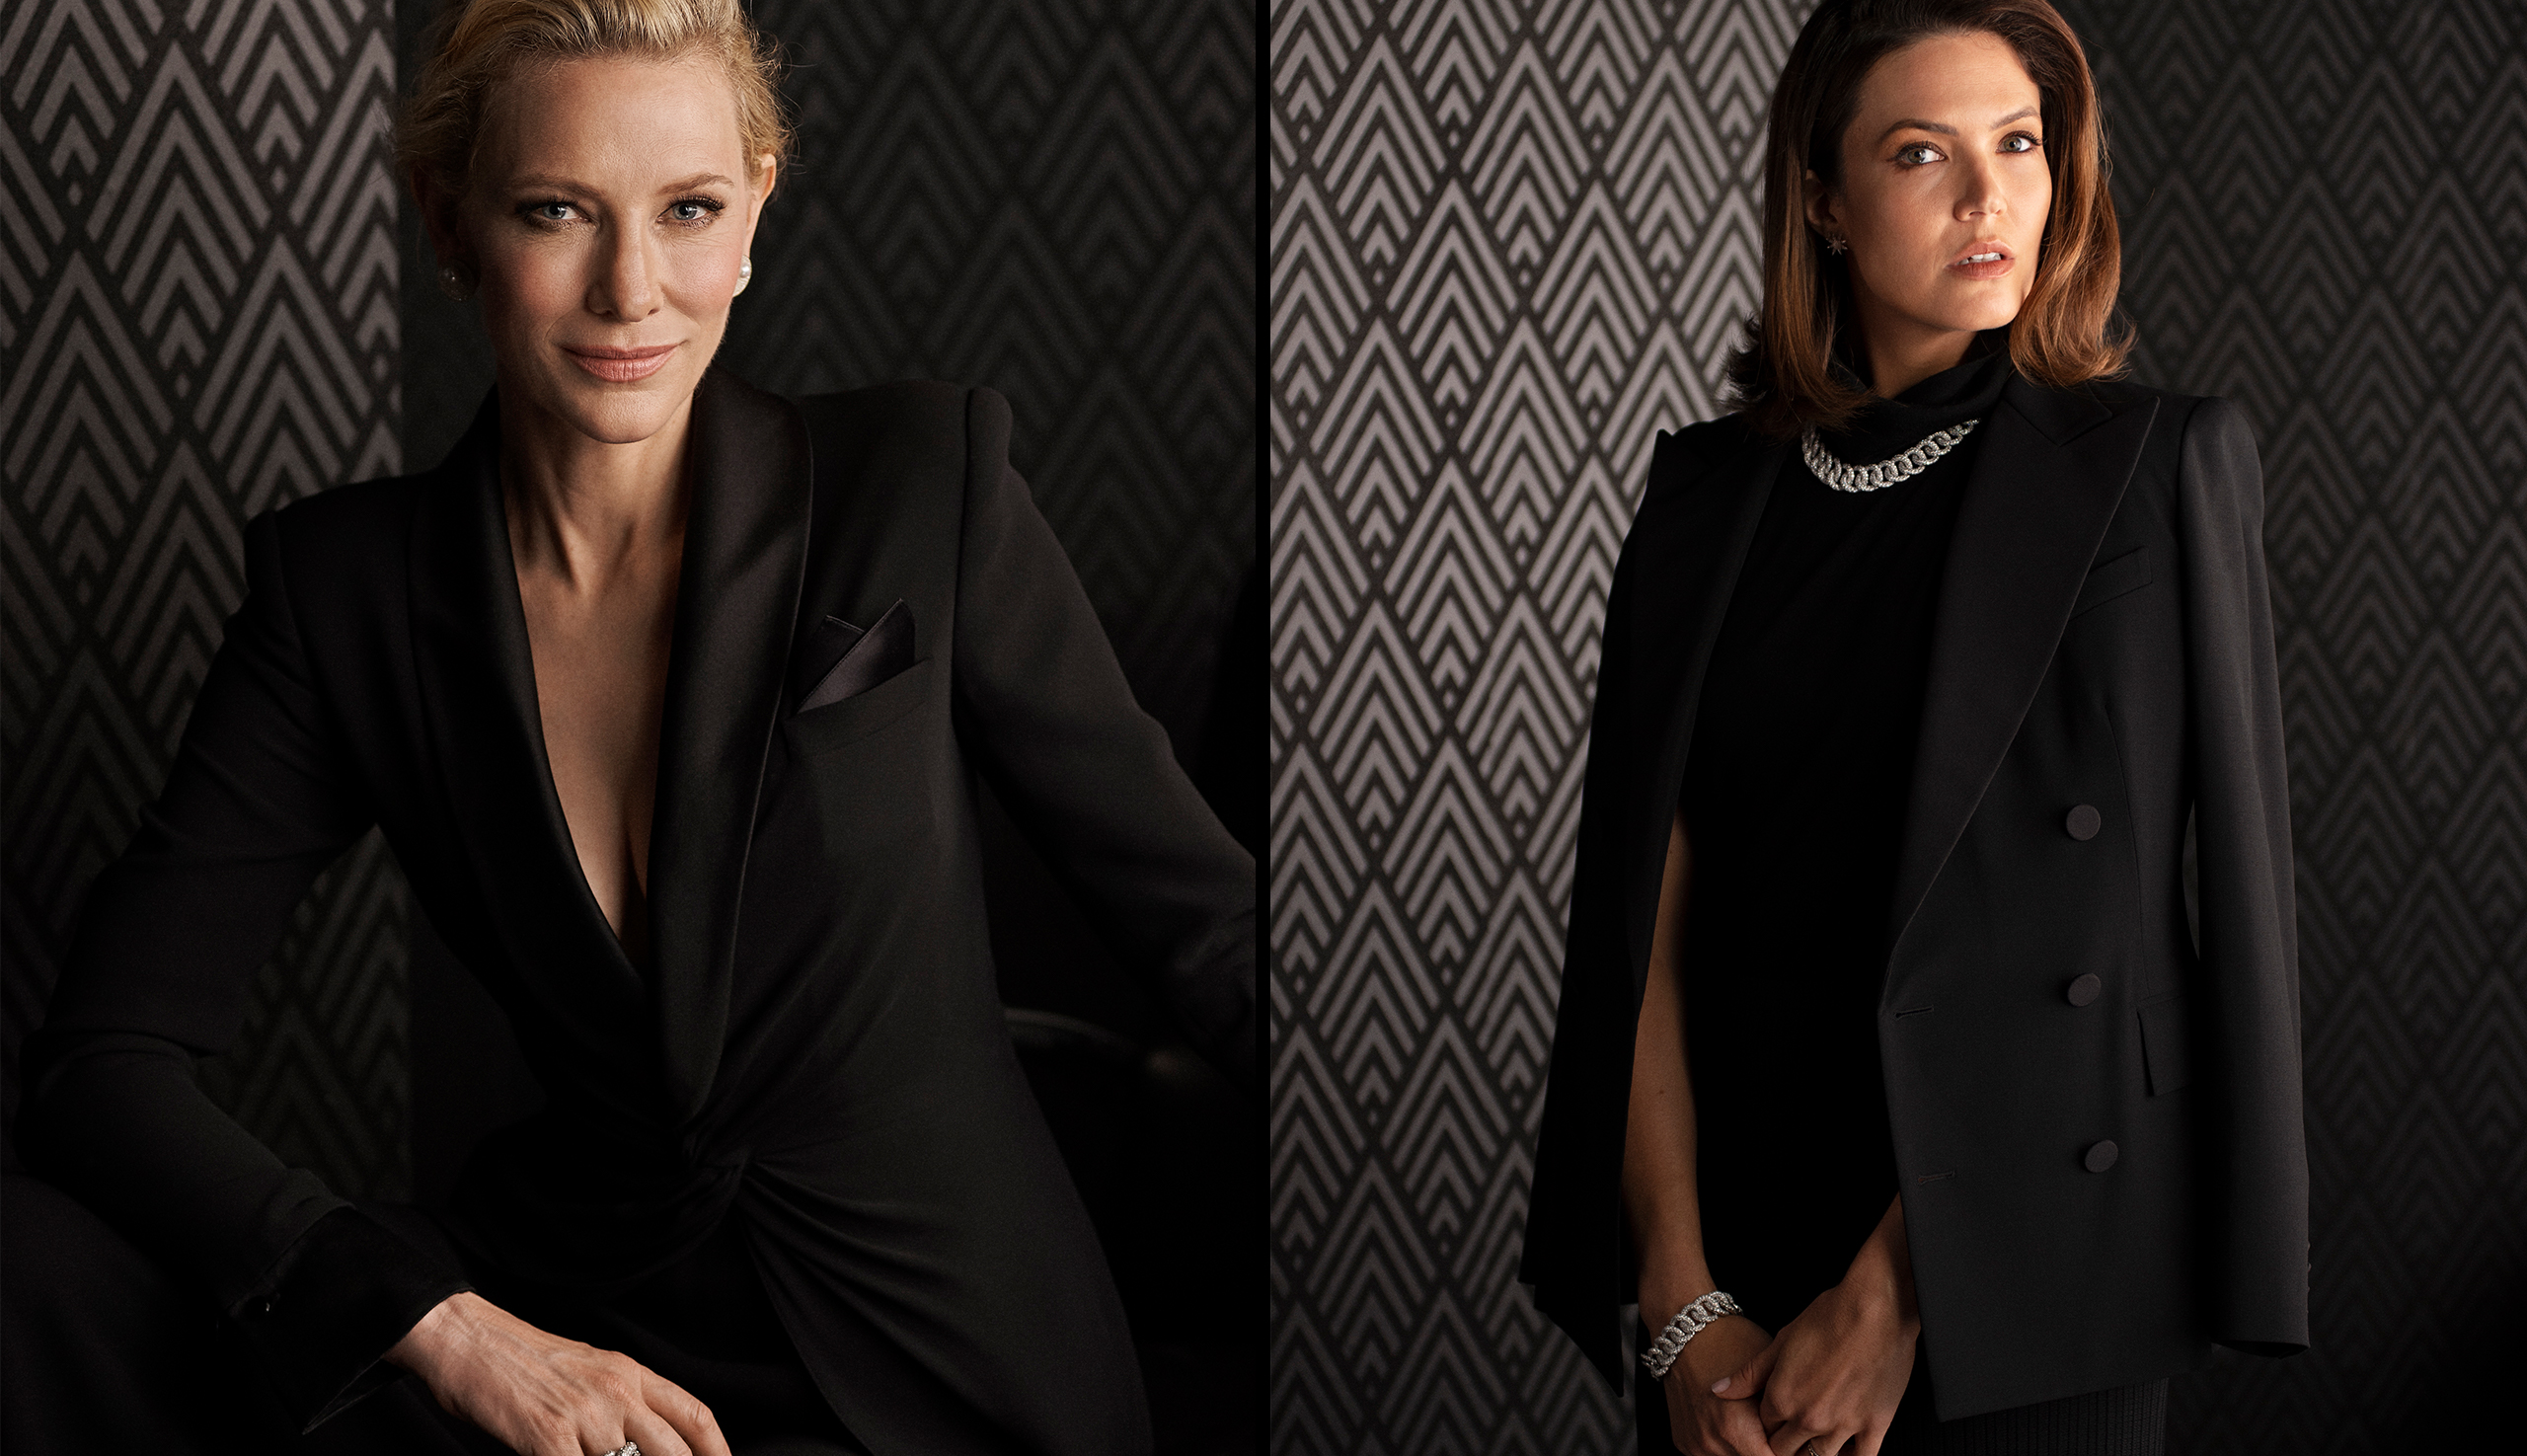 Left: Cate Blanchett; Right: Mandy Moore